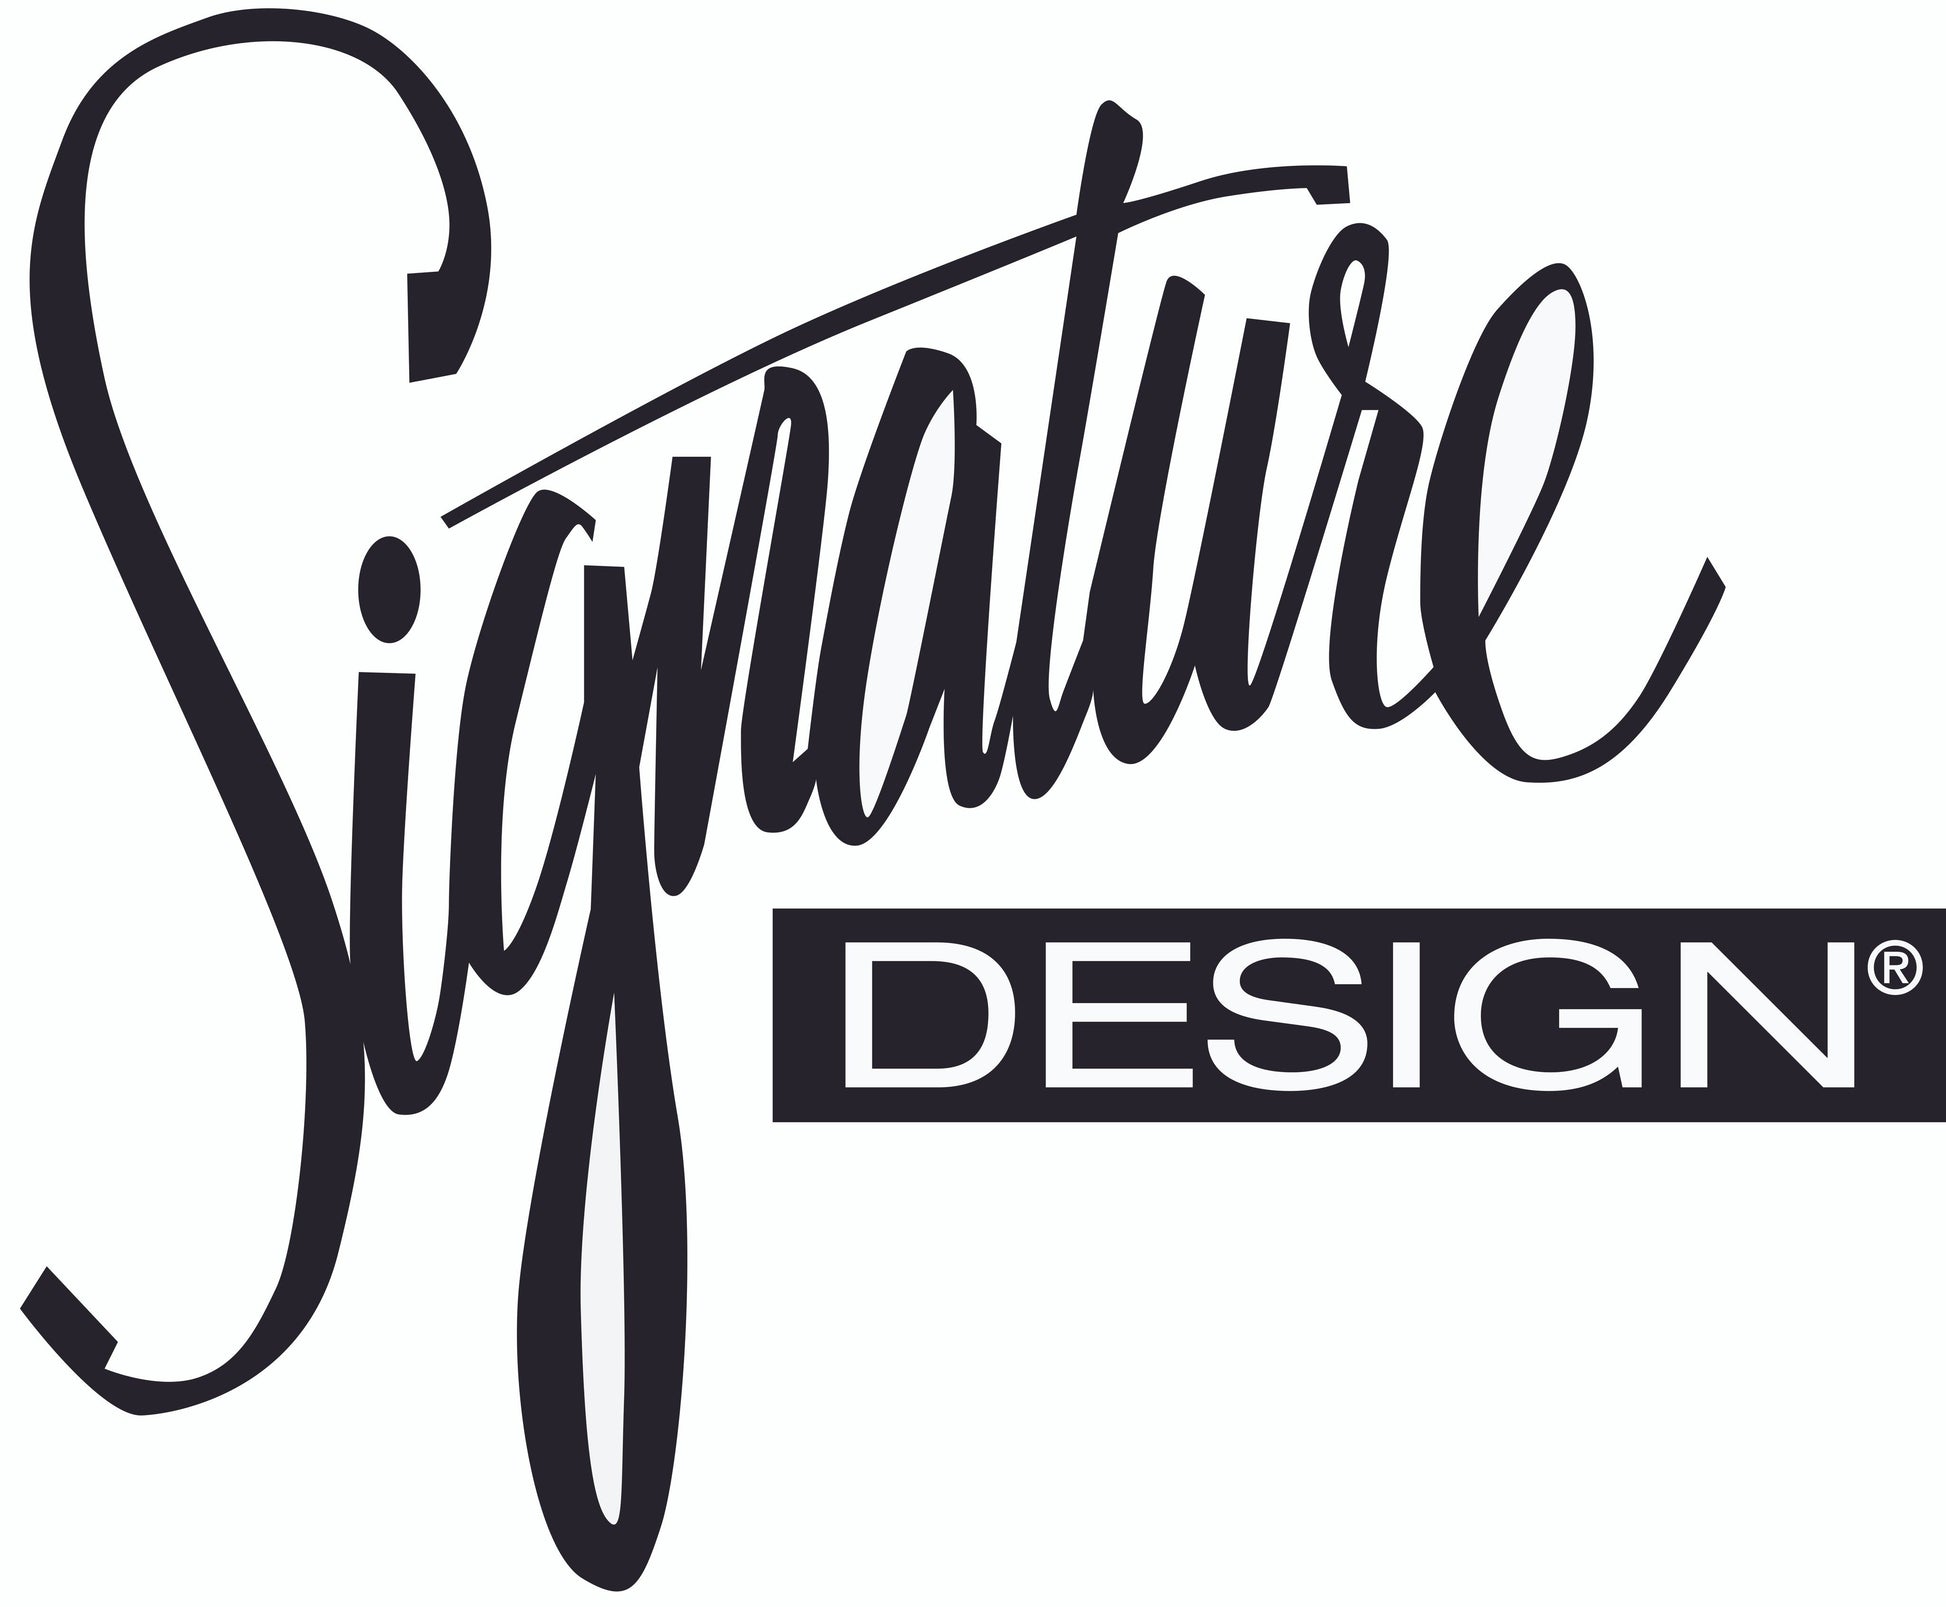 Cielden Dresser and Mirror Signature Design by Ashley®